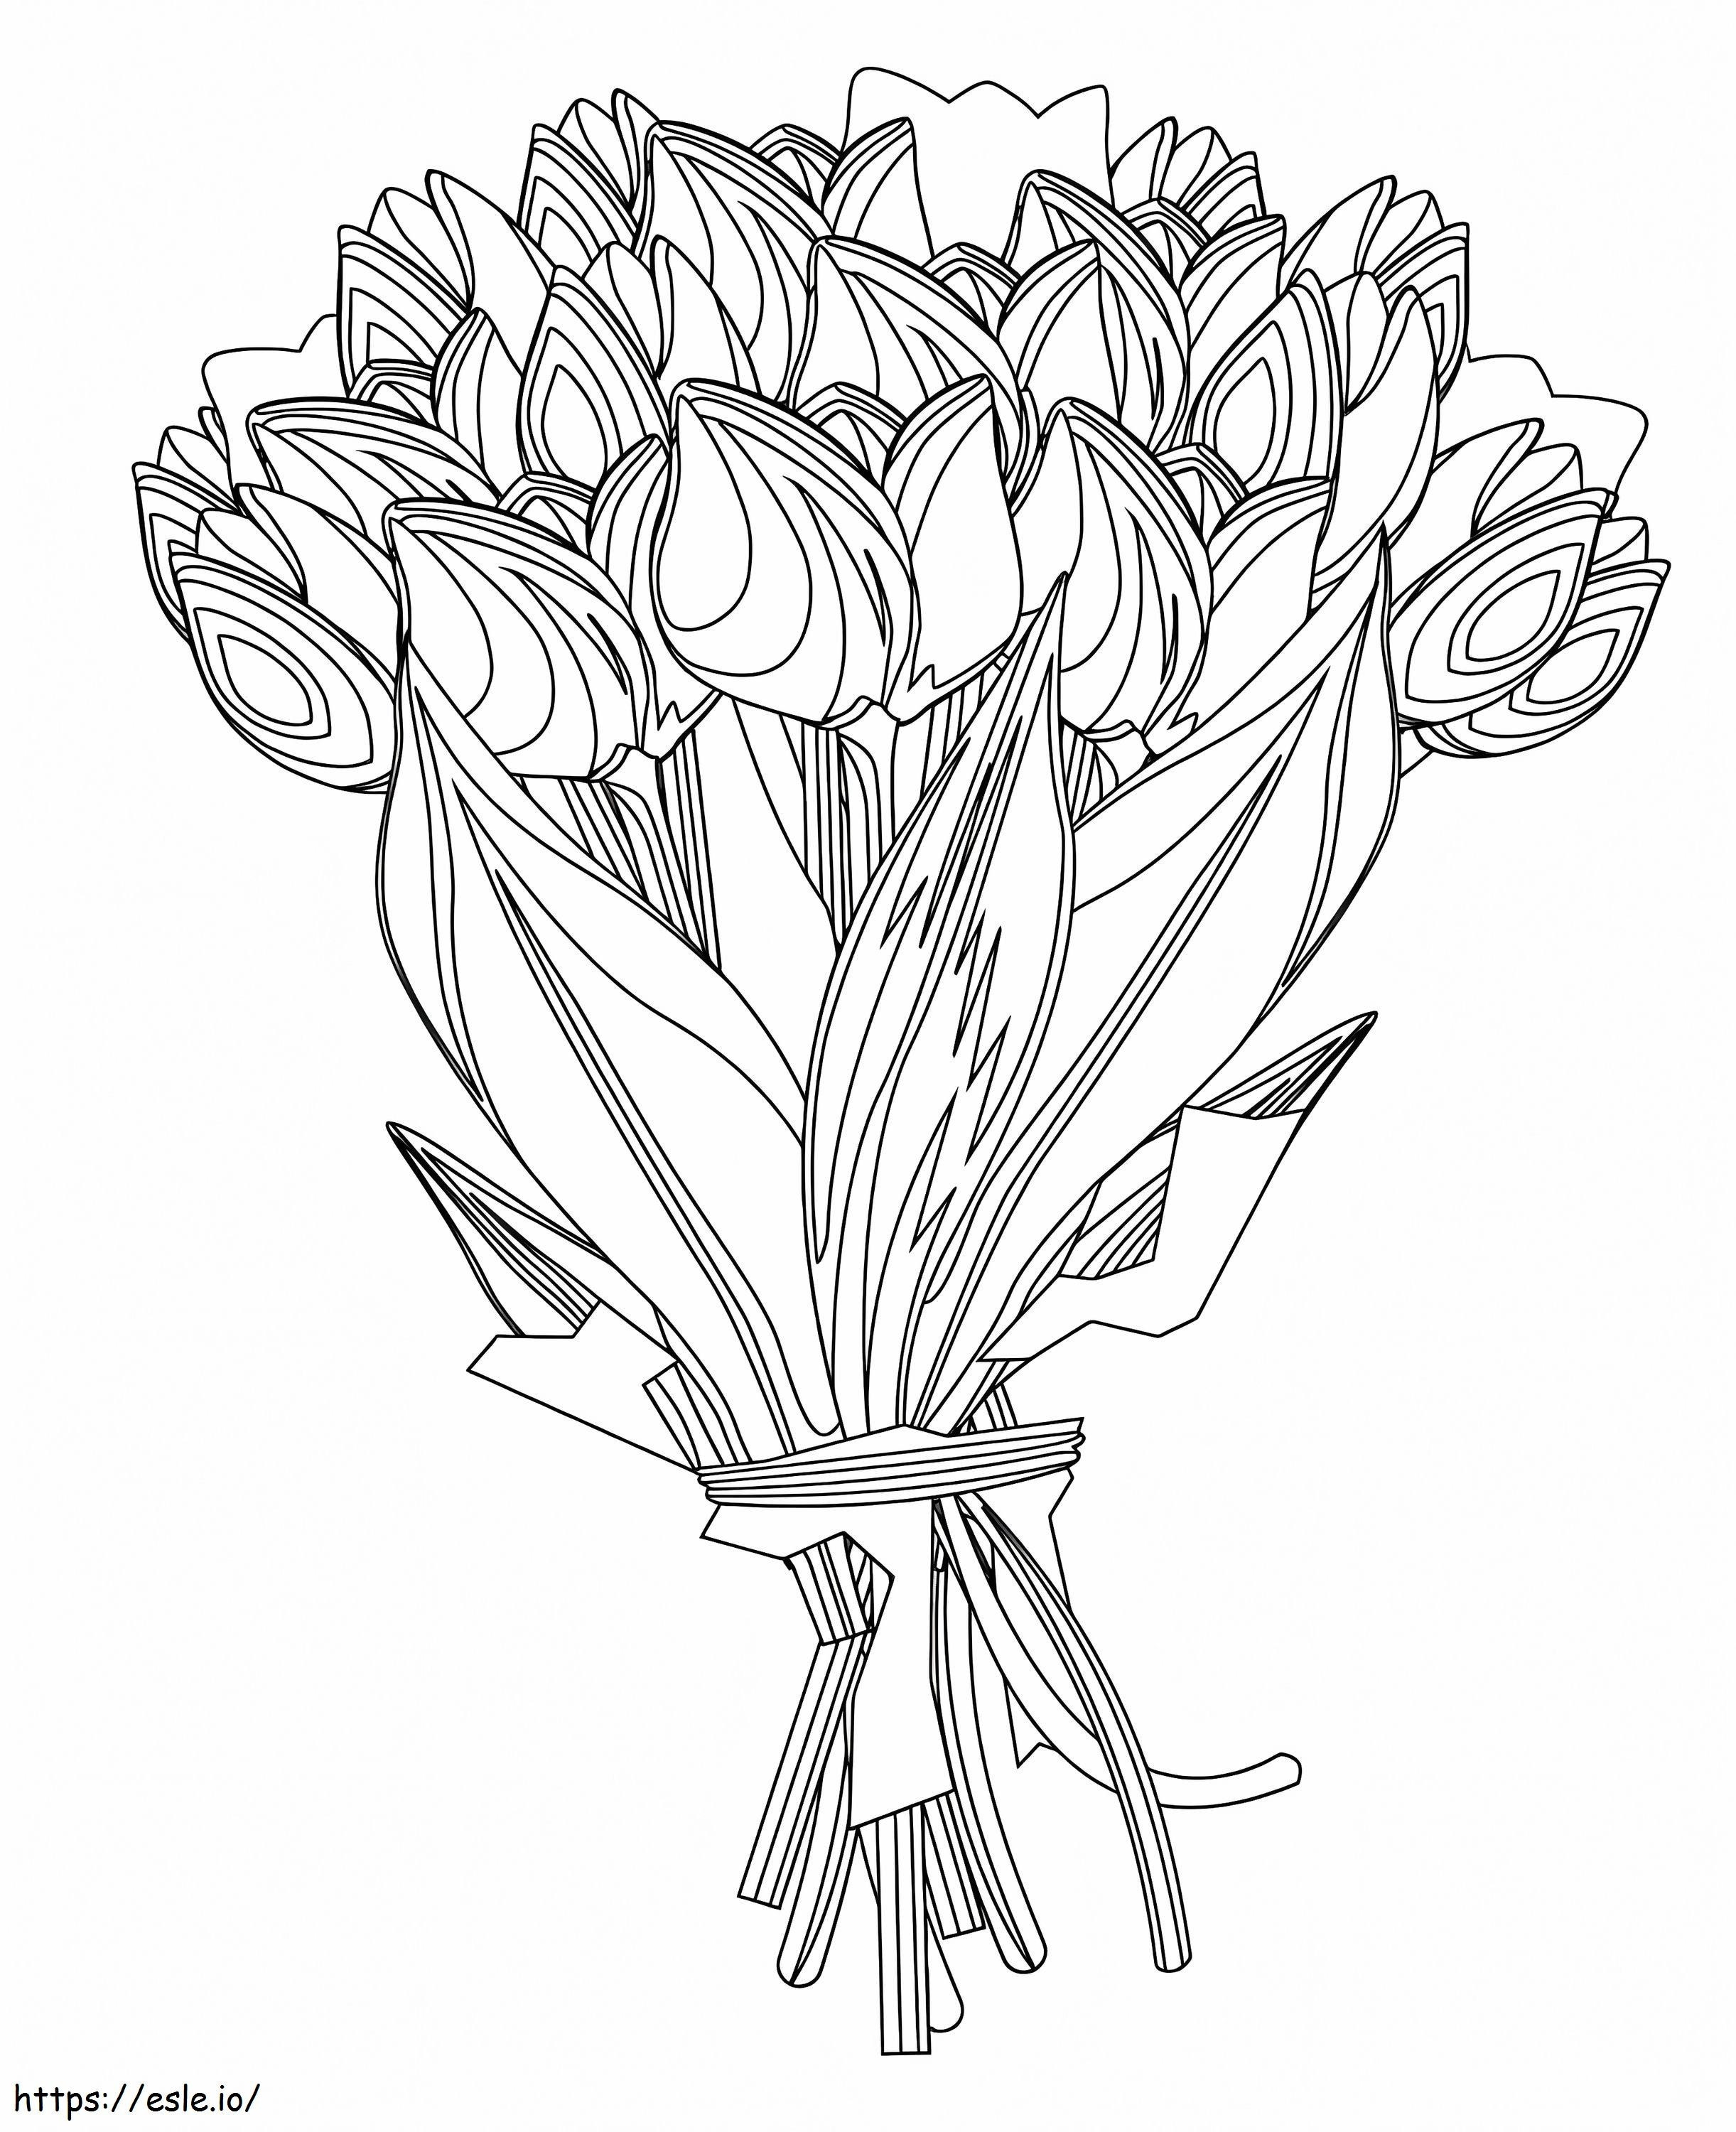 Tulpenblumenstrauß ausmalbilder